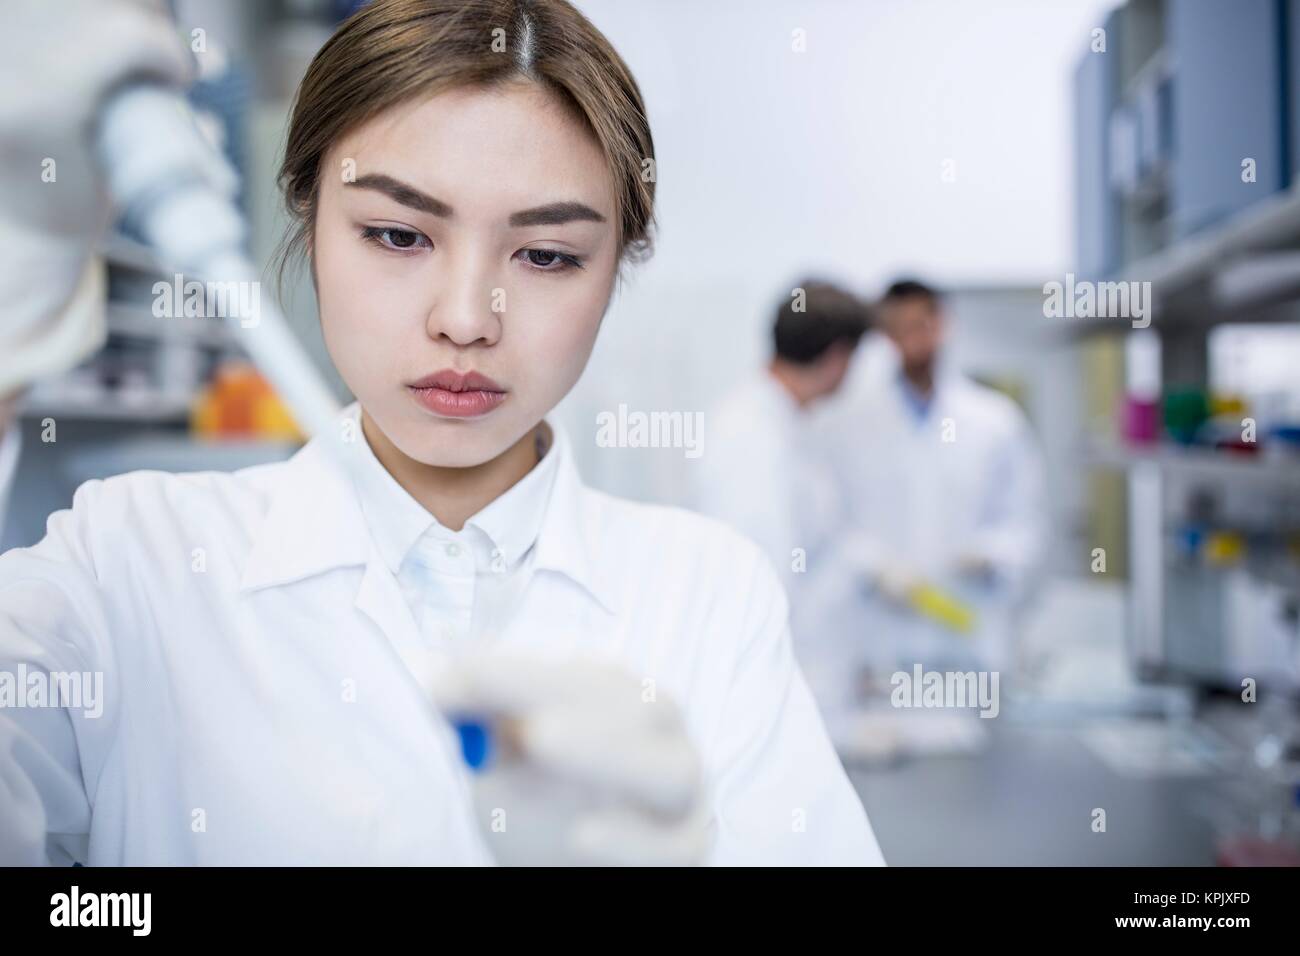 Female scientist working in laboratory. Stock Photo